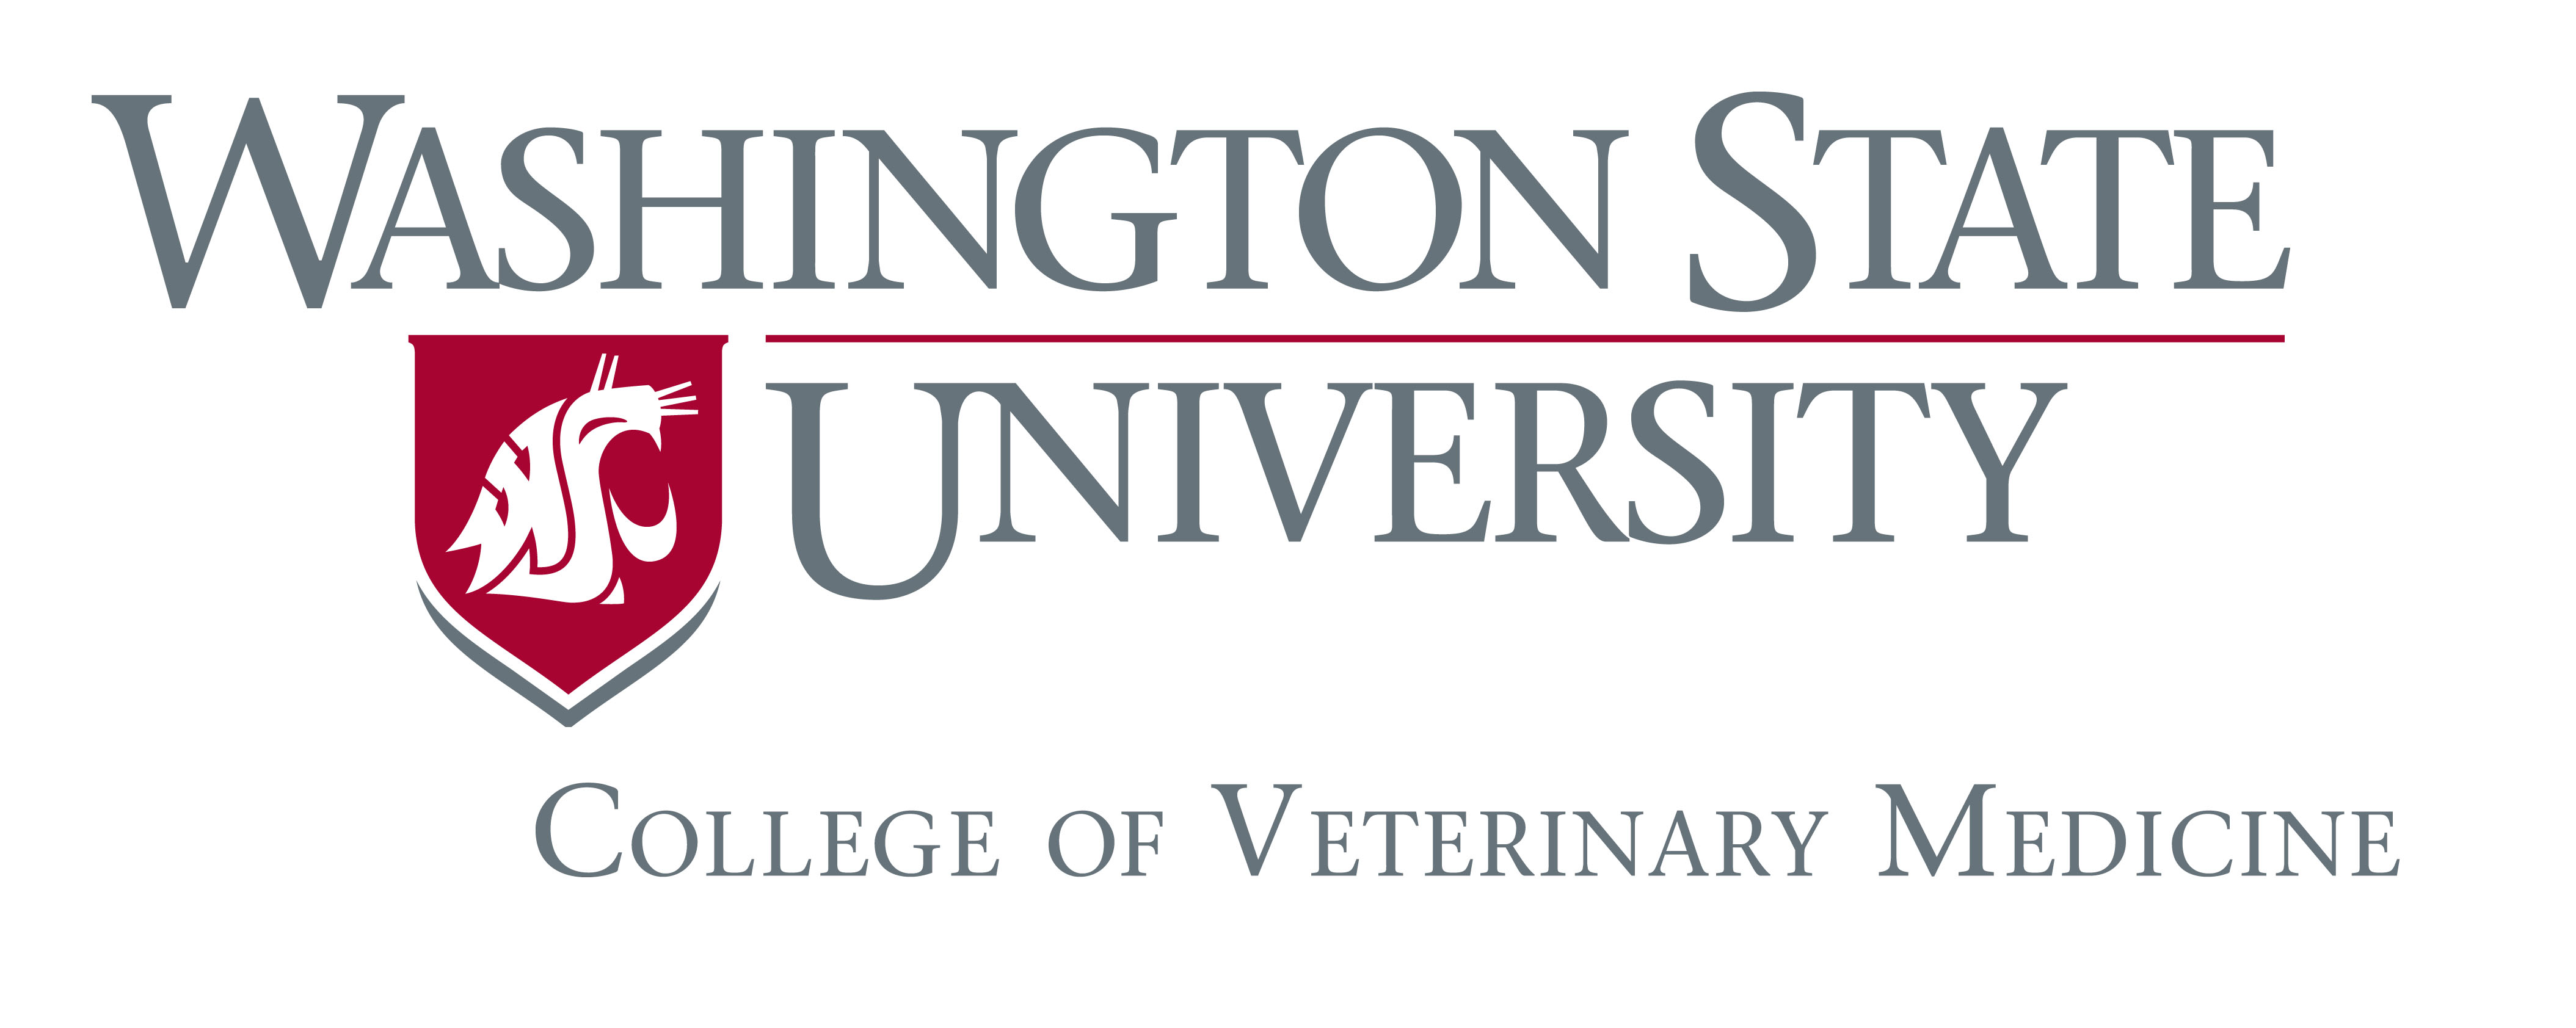 Wsu Veterinary Program